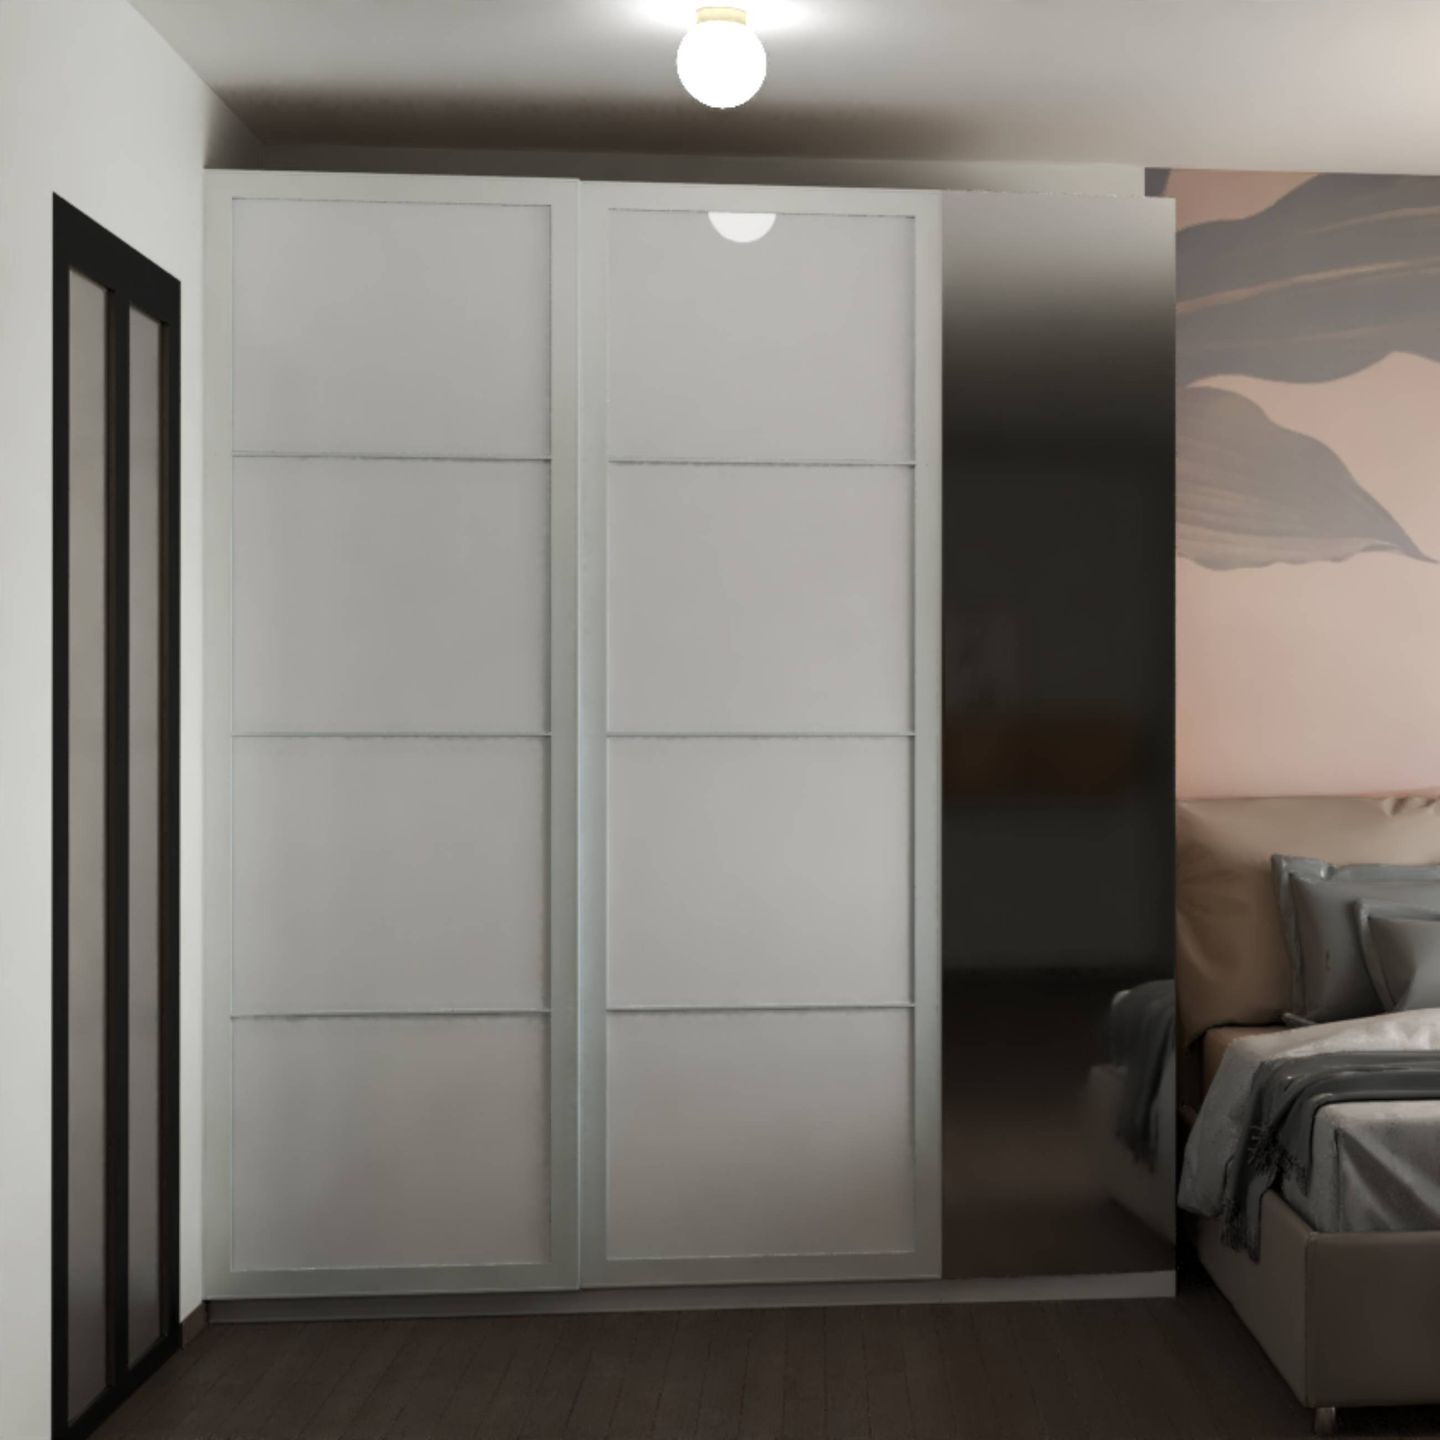 Minimalist Grey Wardrobe Design With Shutters And An Inbuilt Mirror - Livspace